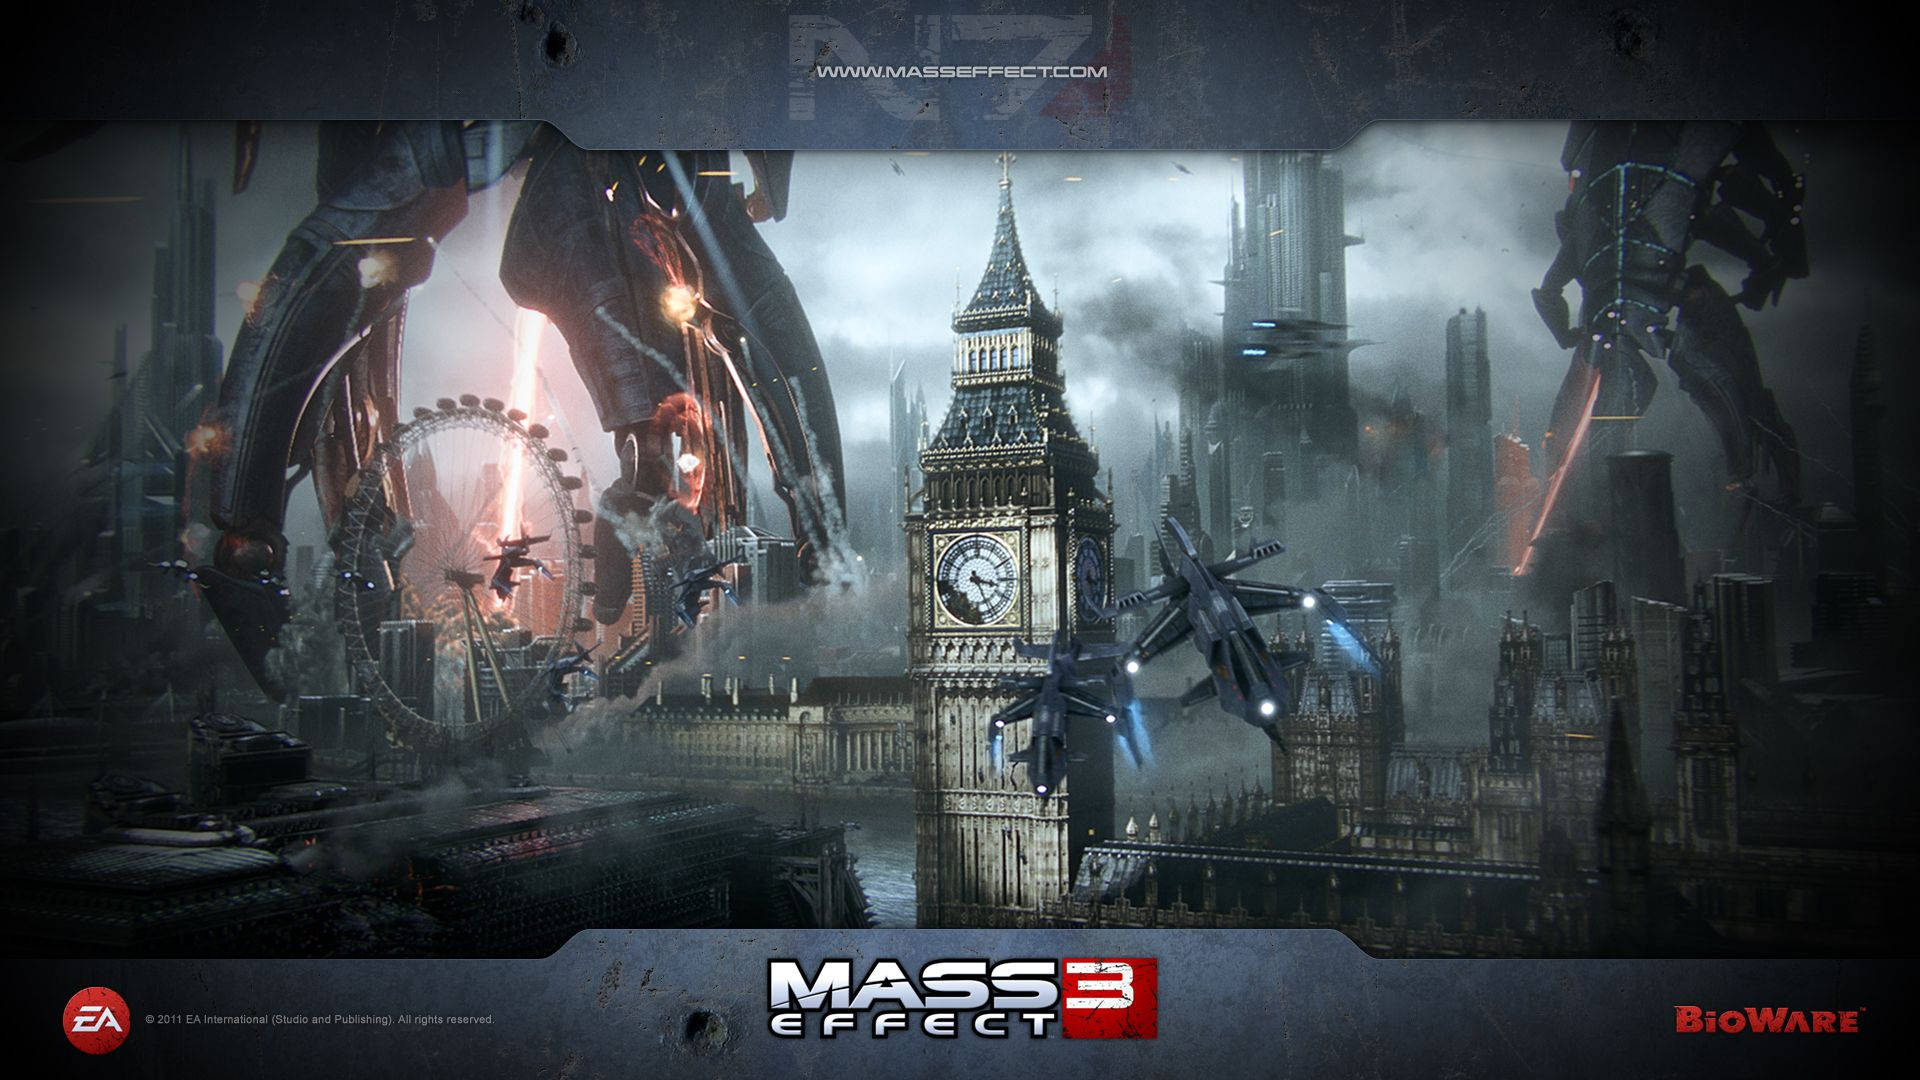 Bioware In Mass Effect 3 Wallpaper